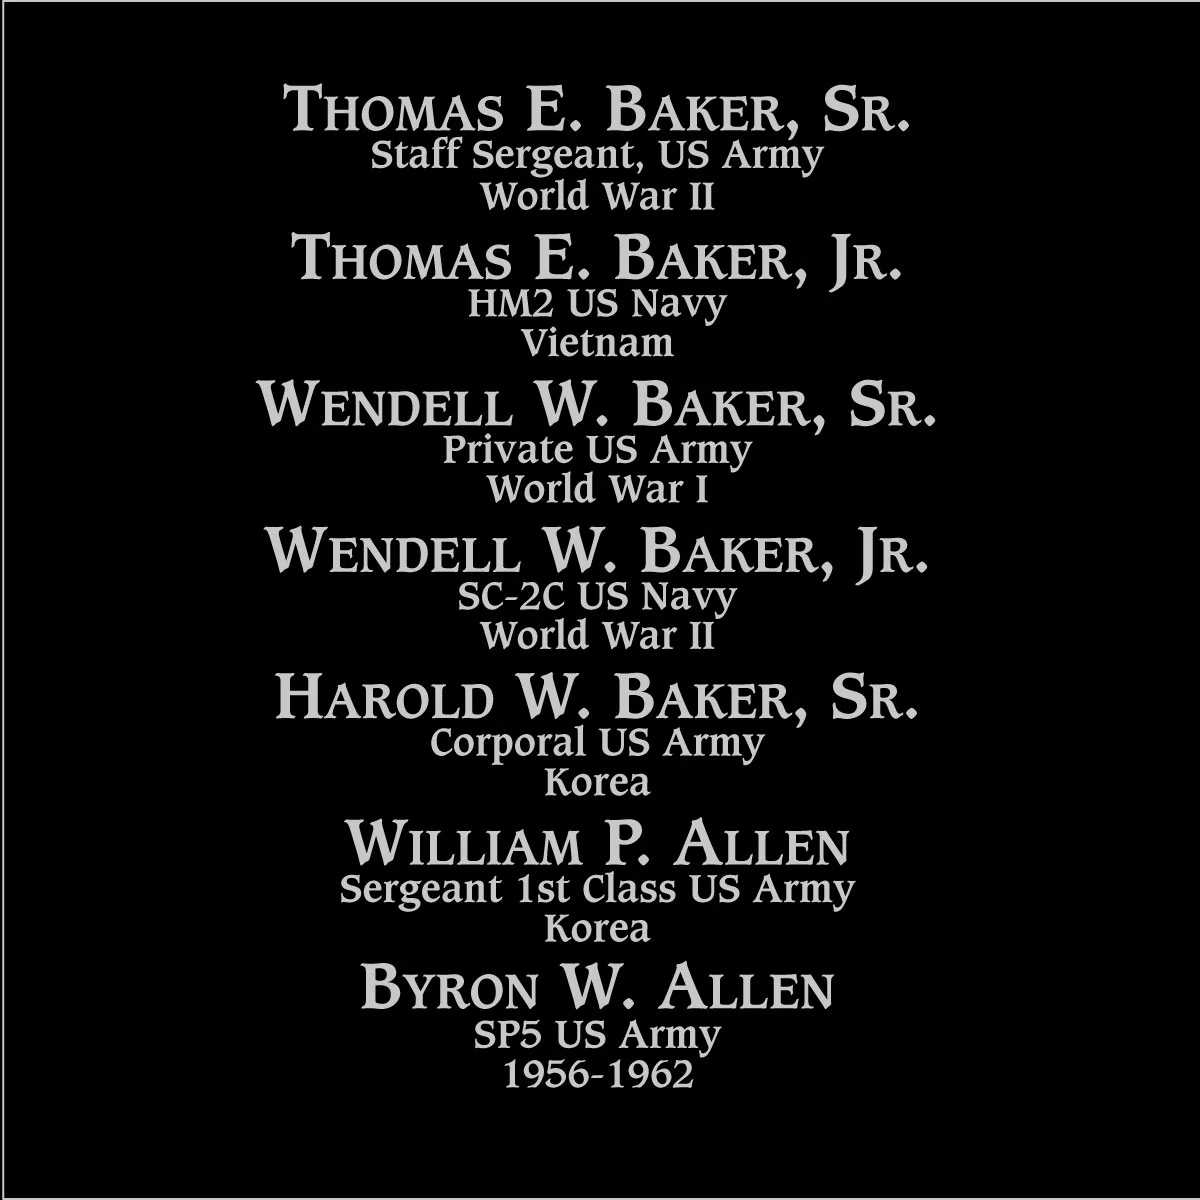 Harold W. Baker, sr